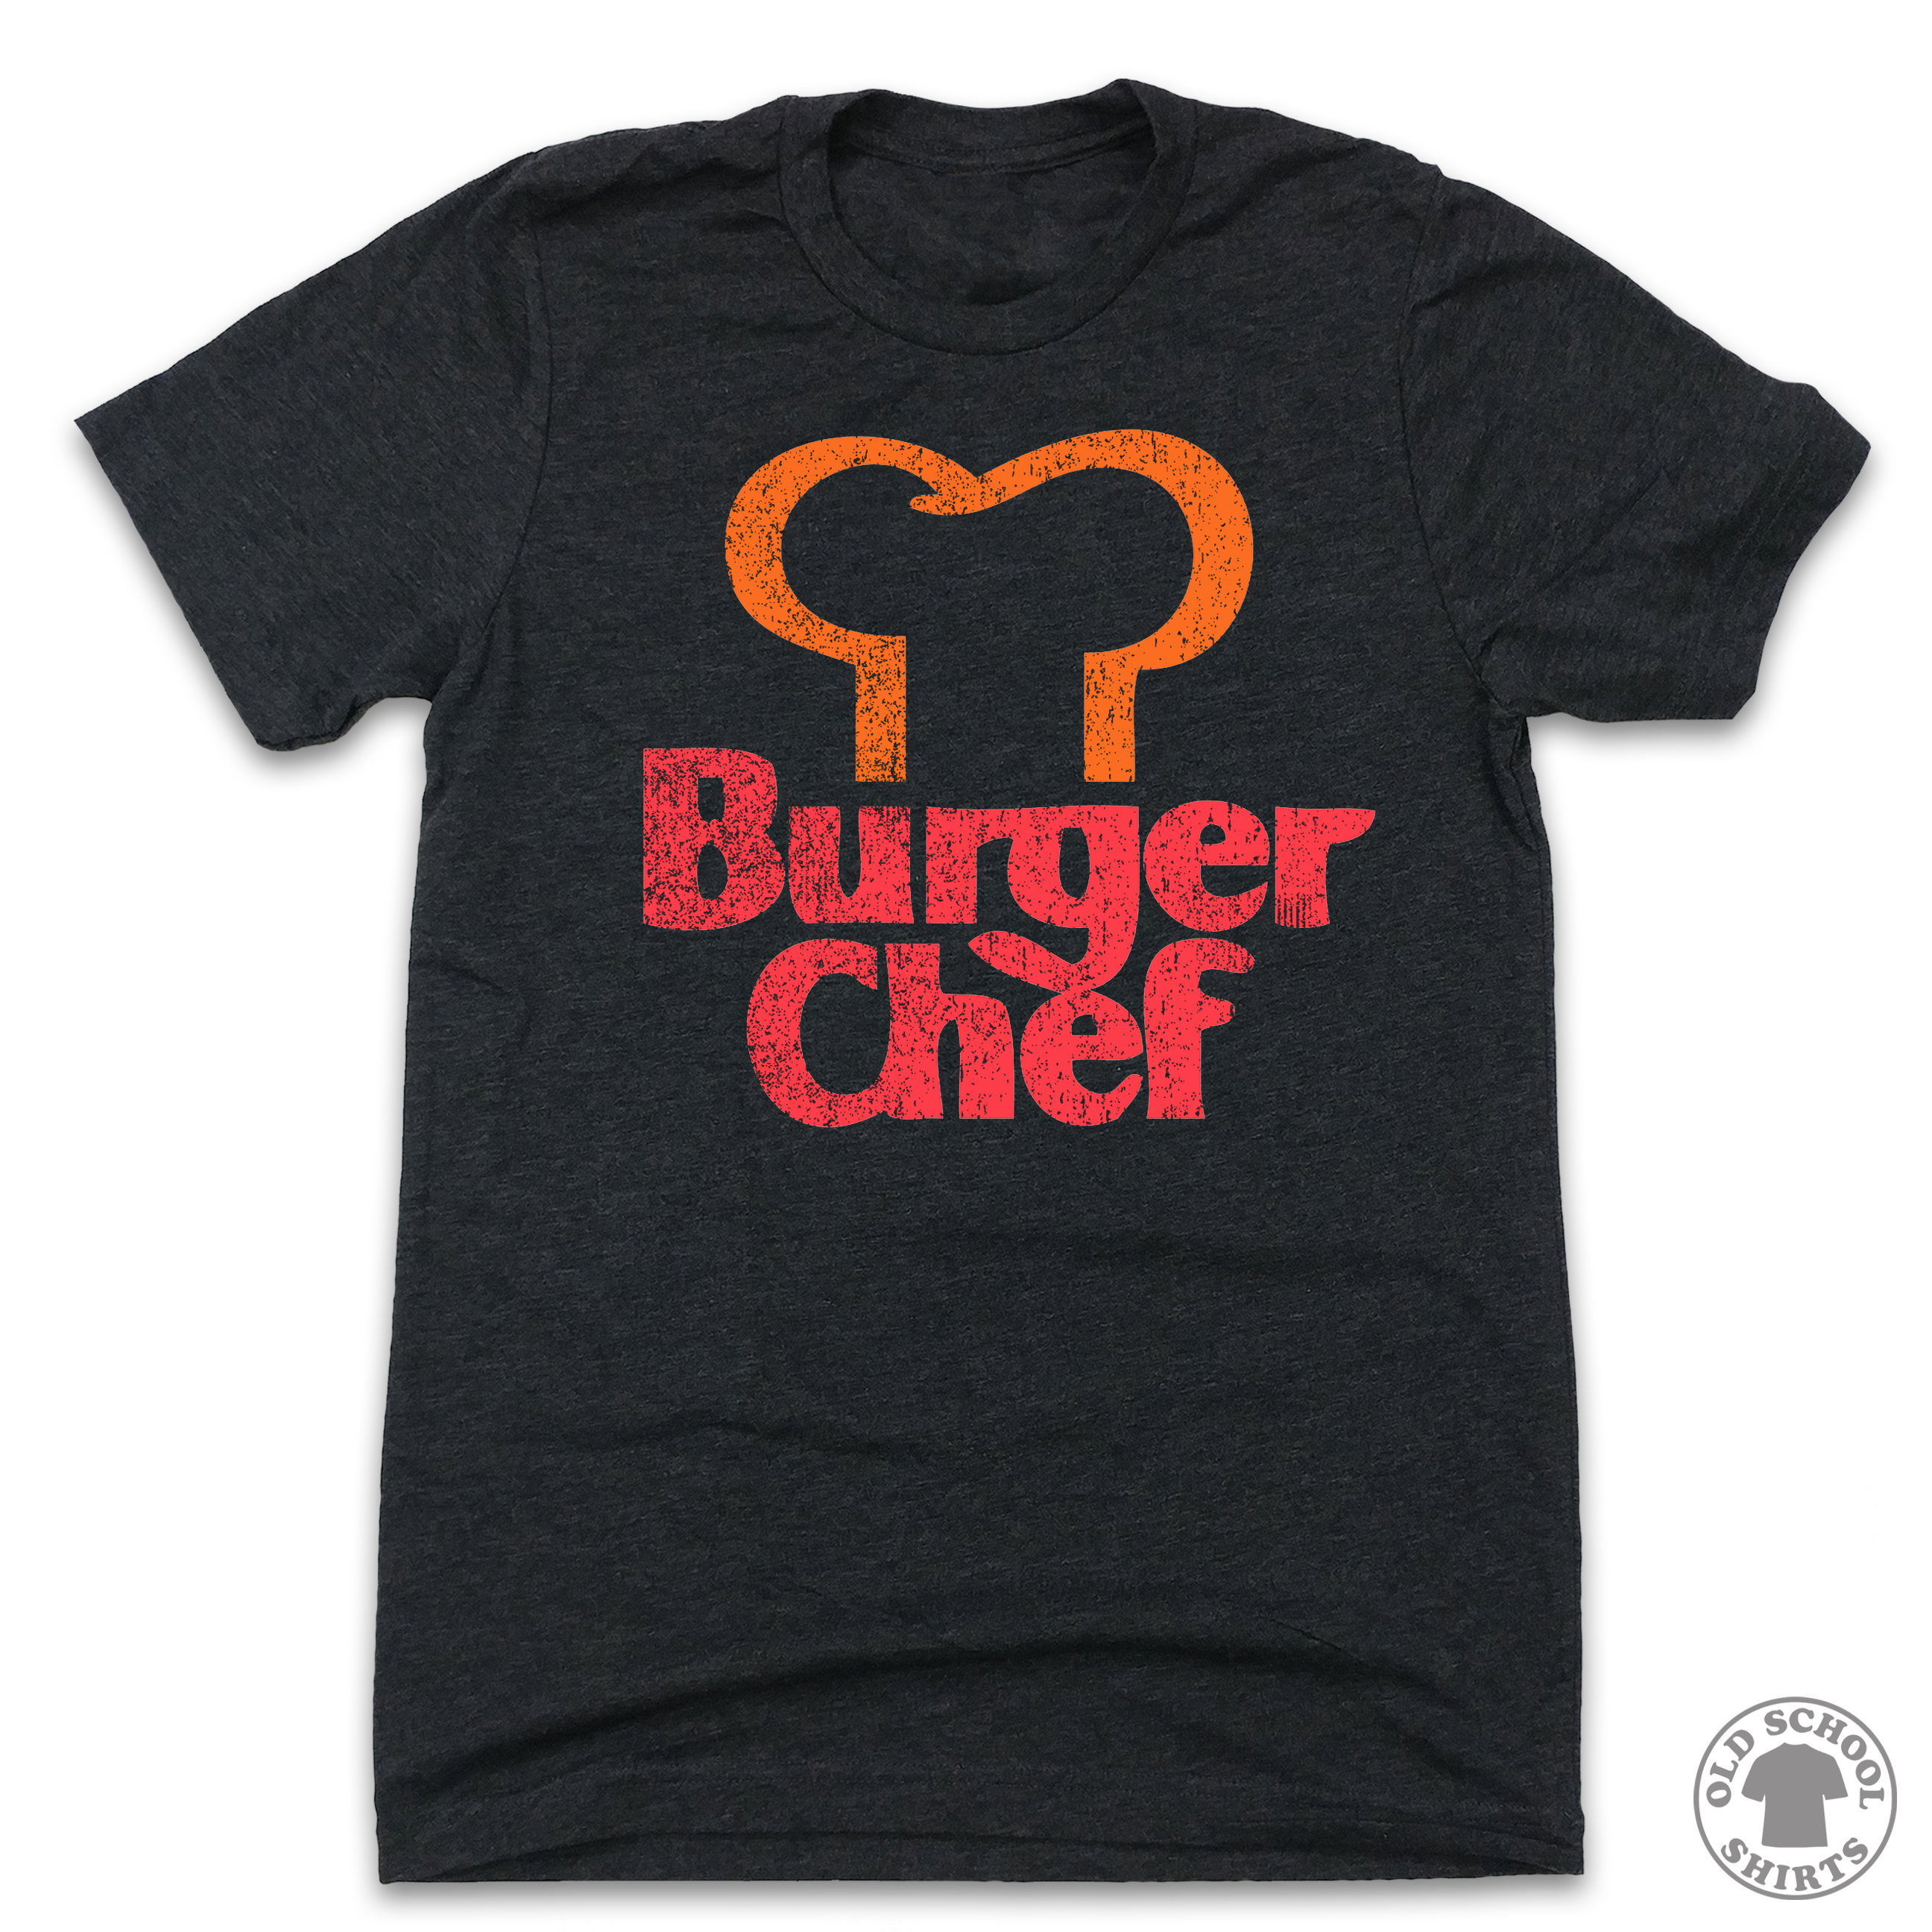 Burger Chef - Old School Shirts- Retro Sports T Shirts